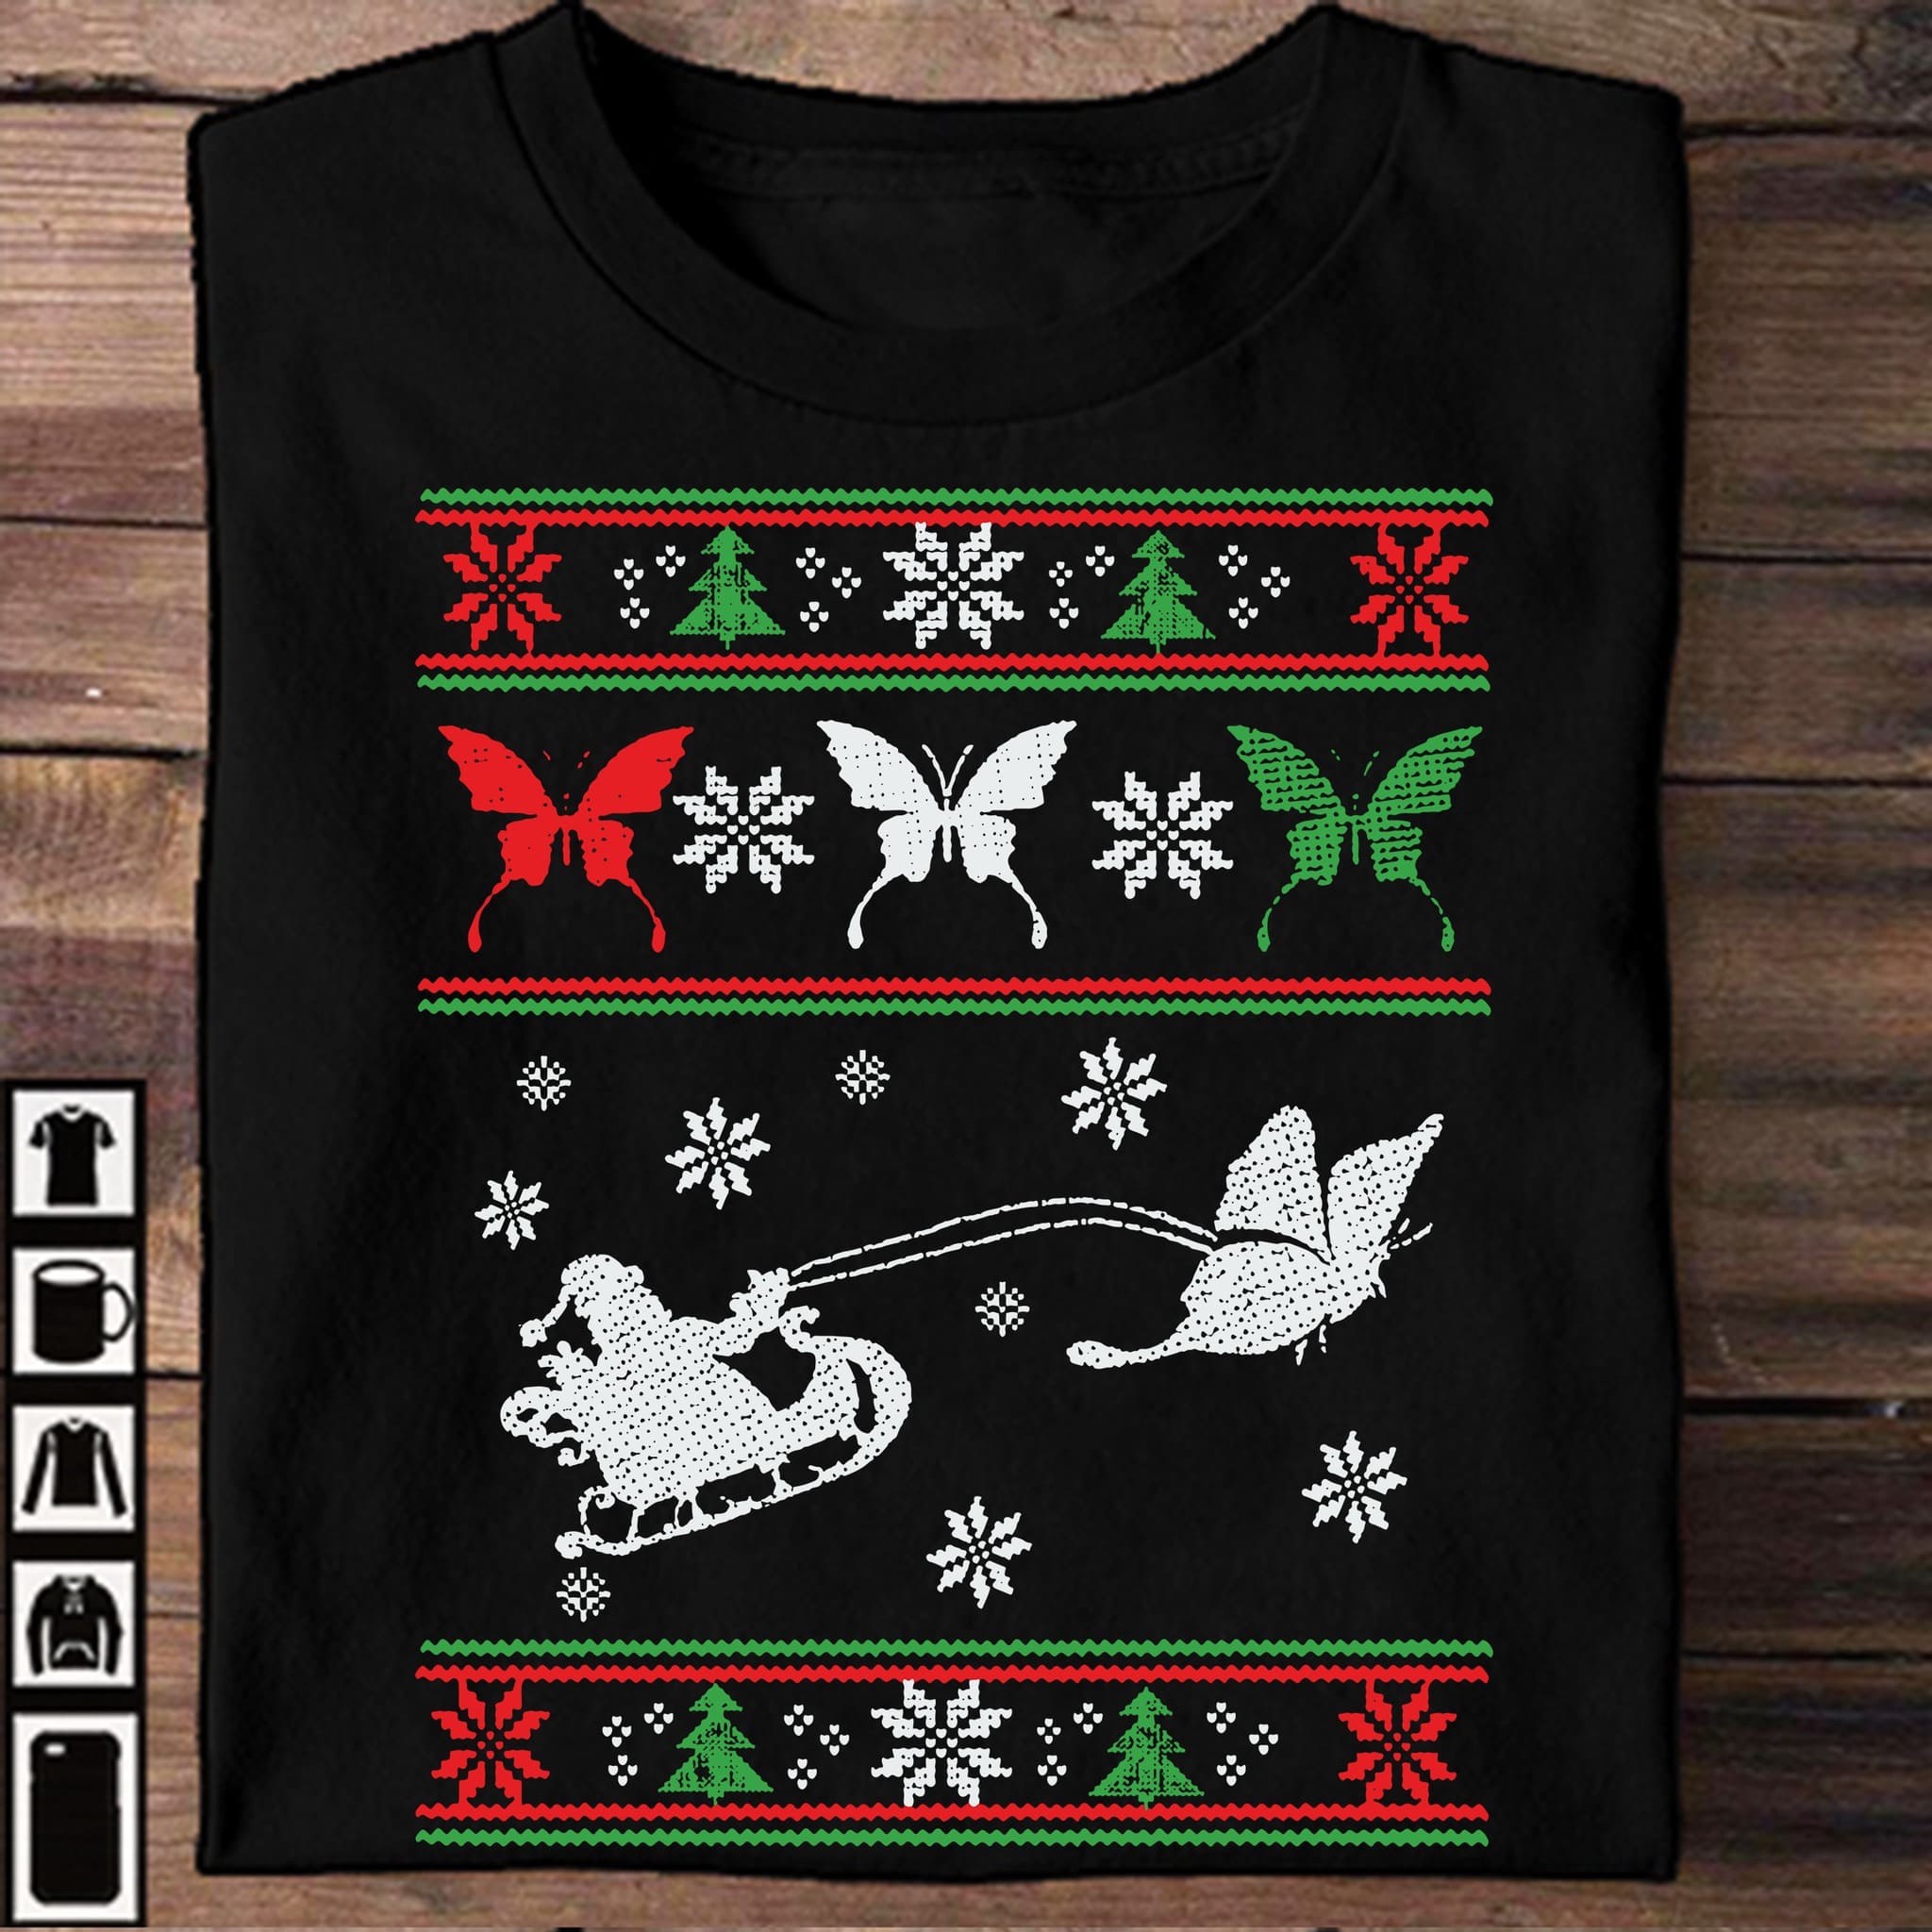 Santa Claus sleigh - Christmas day ugly sweater, Santa butterfly sleigh